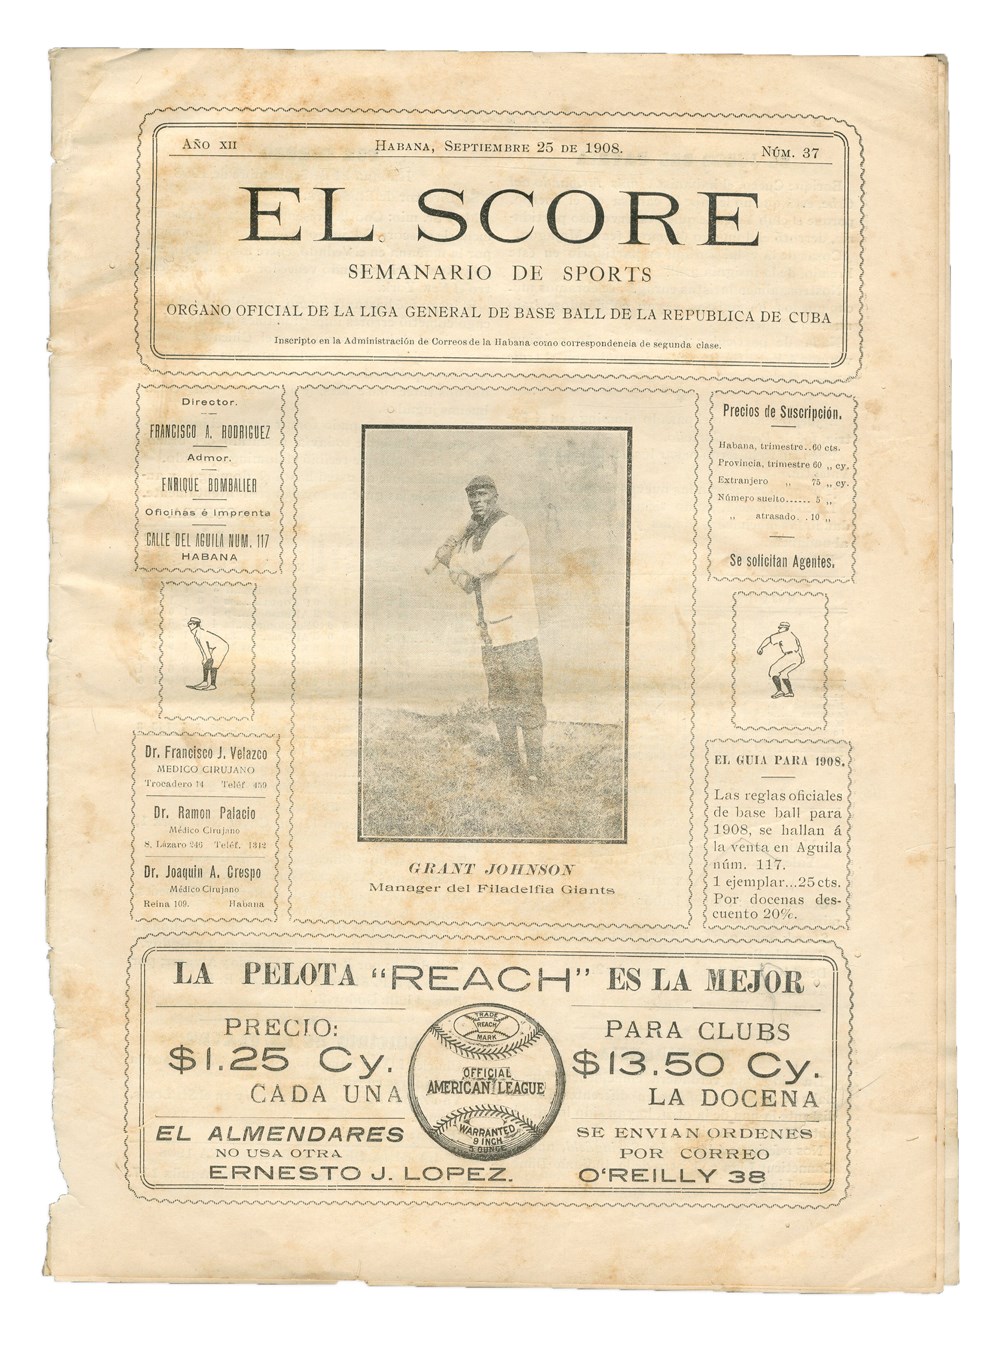 - 1908 Grant "Home Run" Johnson Cuban Program/Magazine - Legendary Negro Leaguer's Only Known Cover